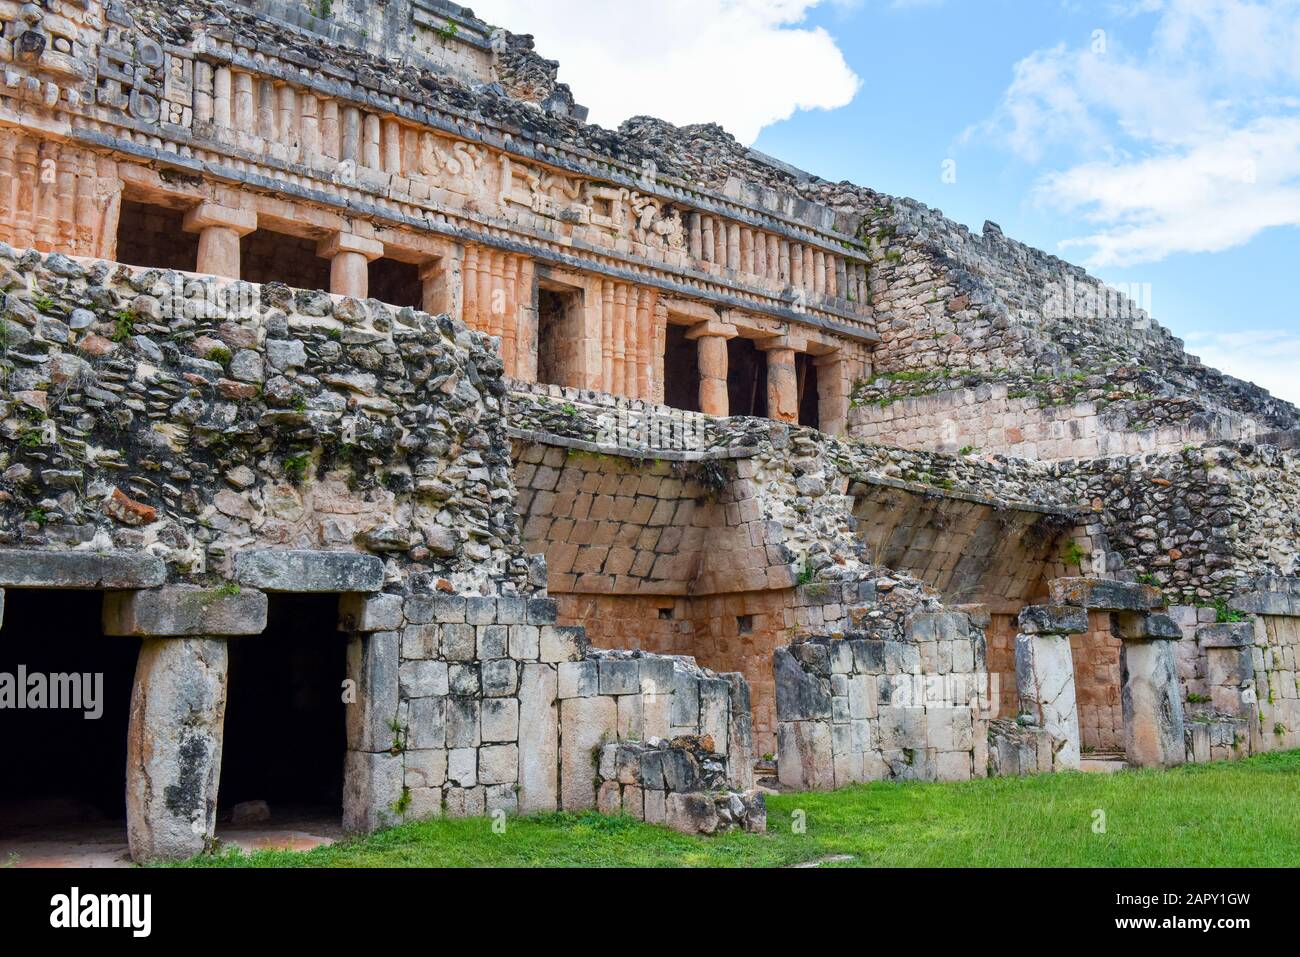 The Great Palace of Sayil, Mayan ruins, Puuc region, Yucatan Mexico Stock Photo